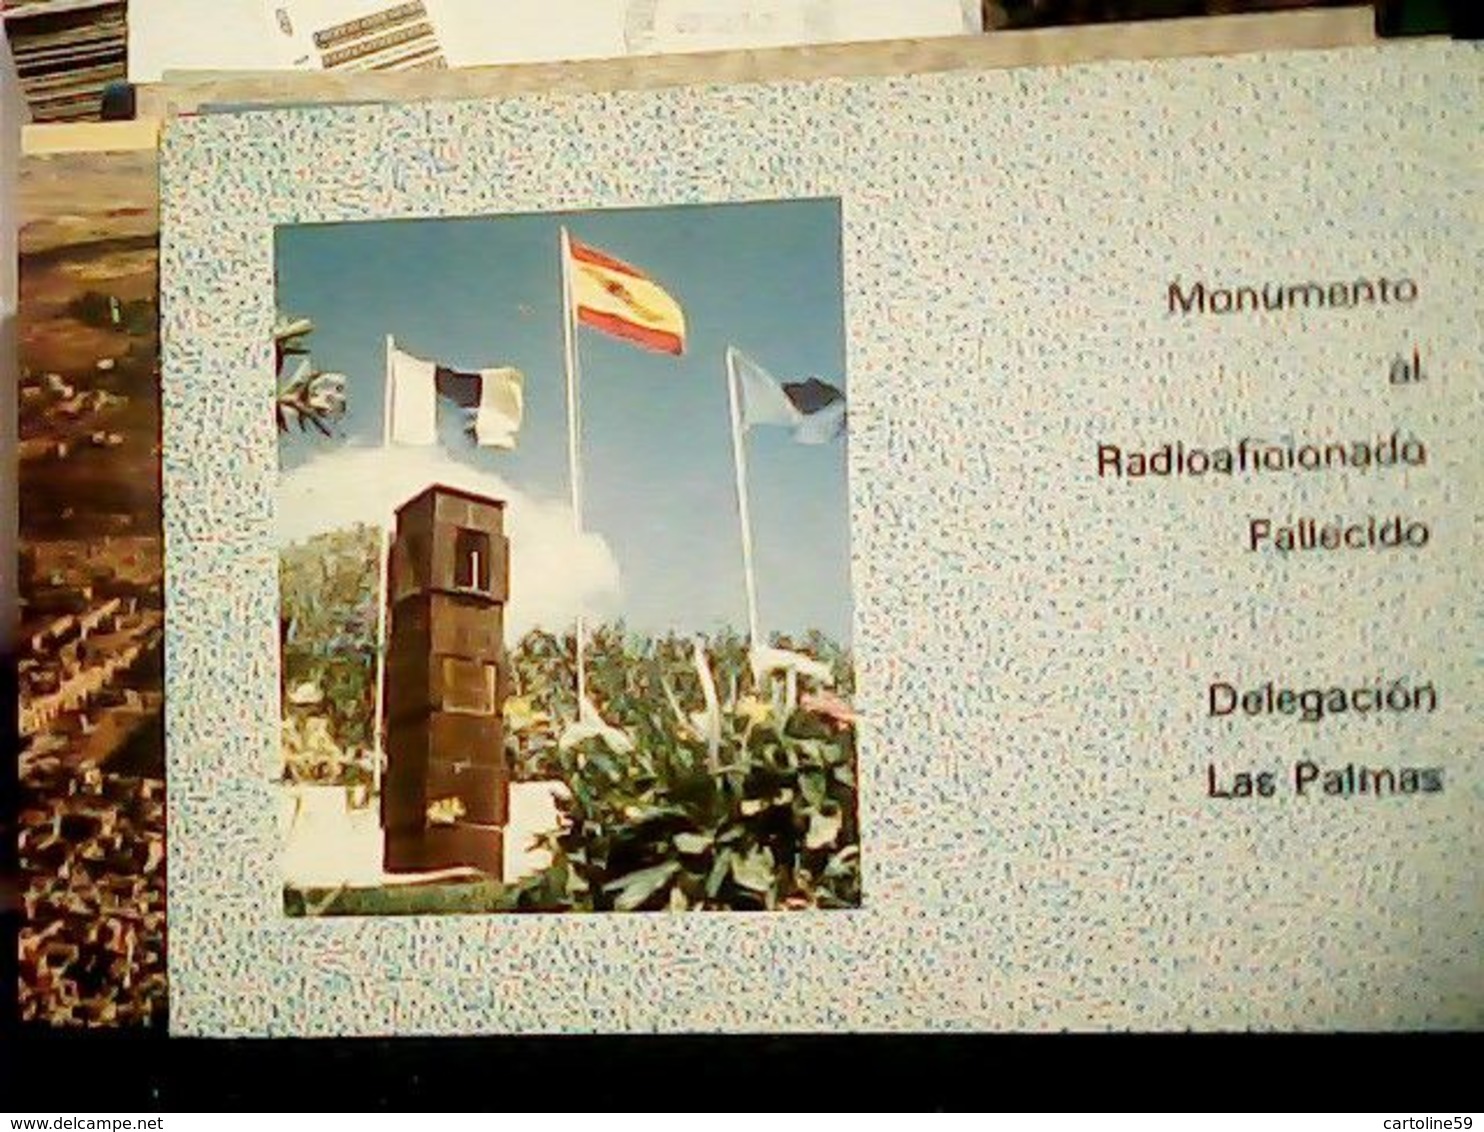 ESPANA CANARIAS LAS PALMAS MONUMETO AL RADIOFICIONADO FALLECIDO  QSL  1984 HQ9431 - La Palma